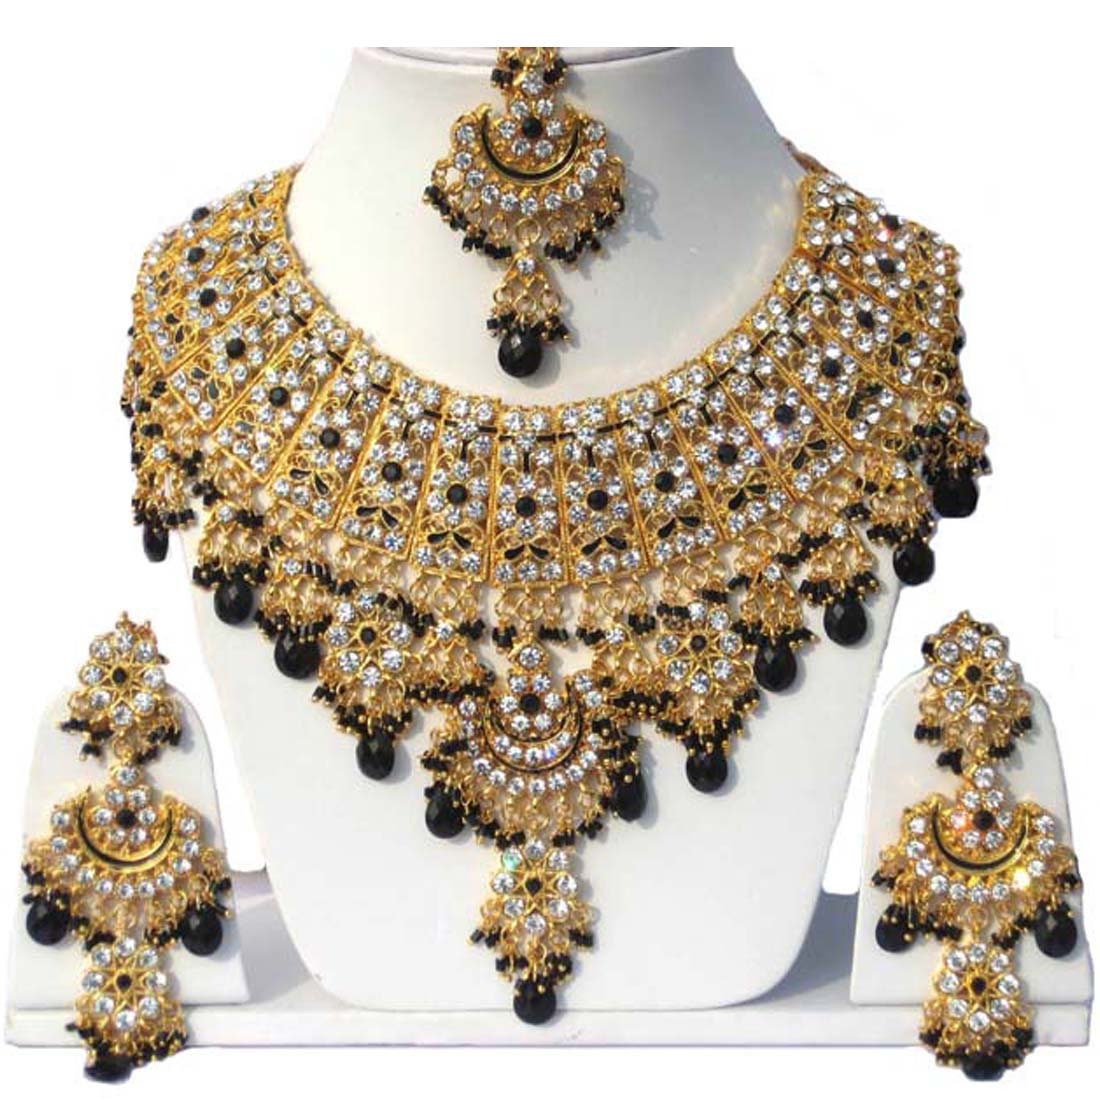 Thanks for the great review Shazia Arif ★★★★★! etsy.me/44aX3RE #etsy #black #wedding #zircon #women #no #glass #indianbridalset #weddingjewelry #bollywoodjewelry